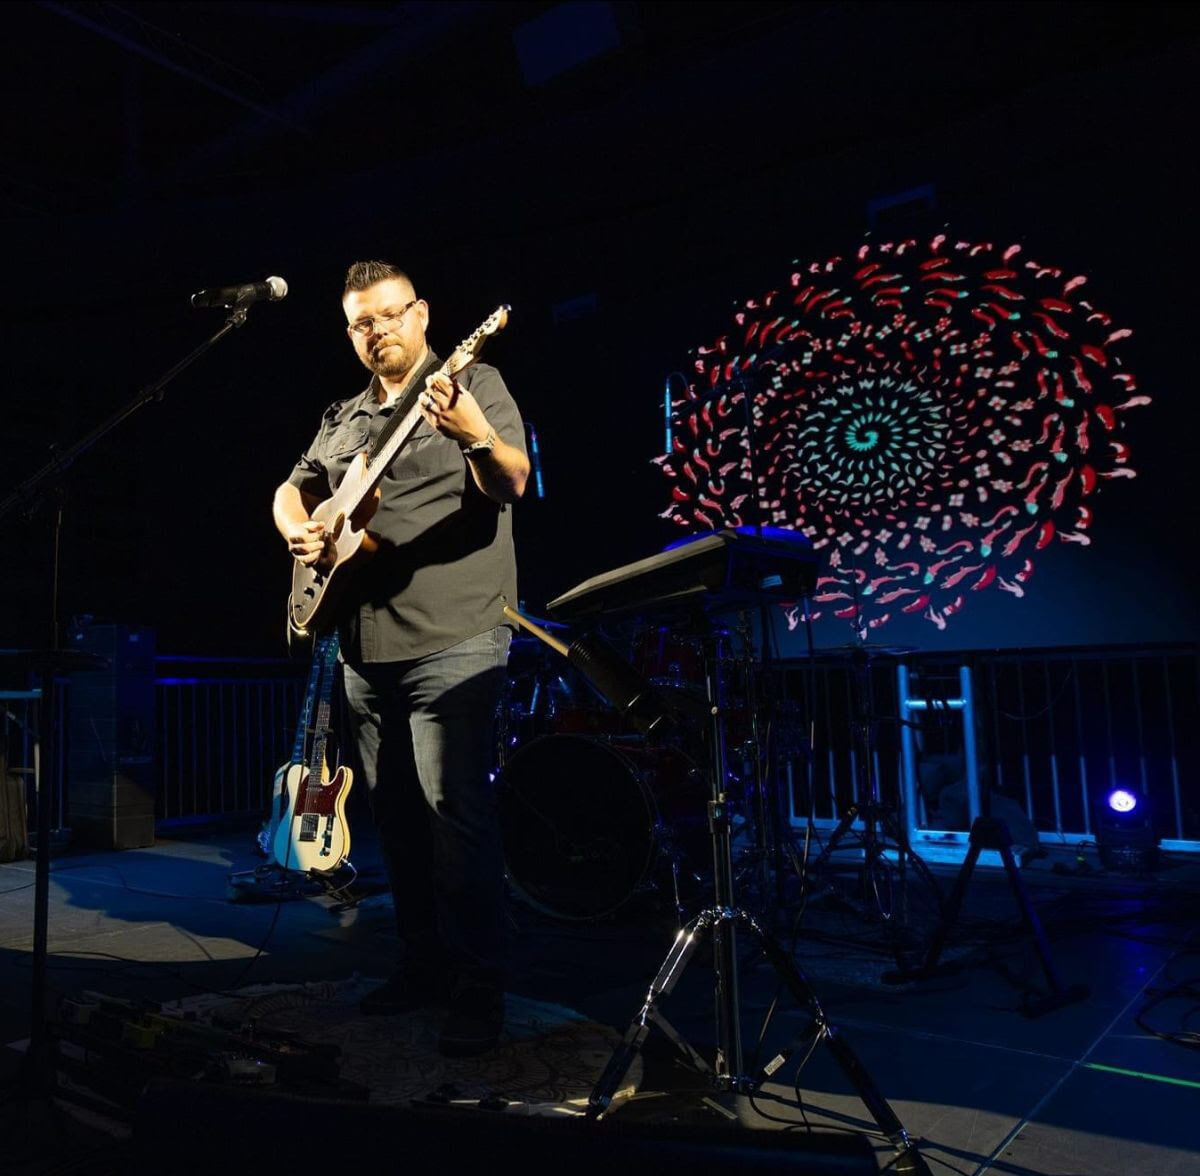 Guitarist Jonny Taylor to perform at Methuselah